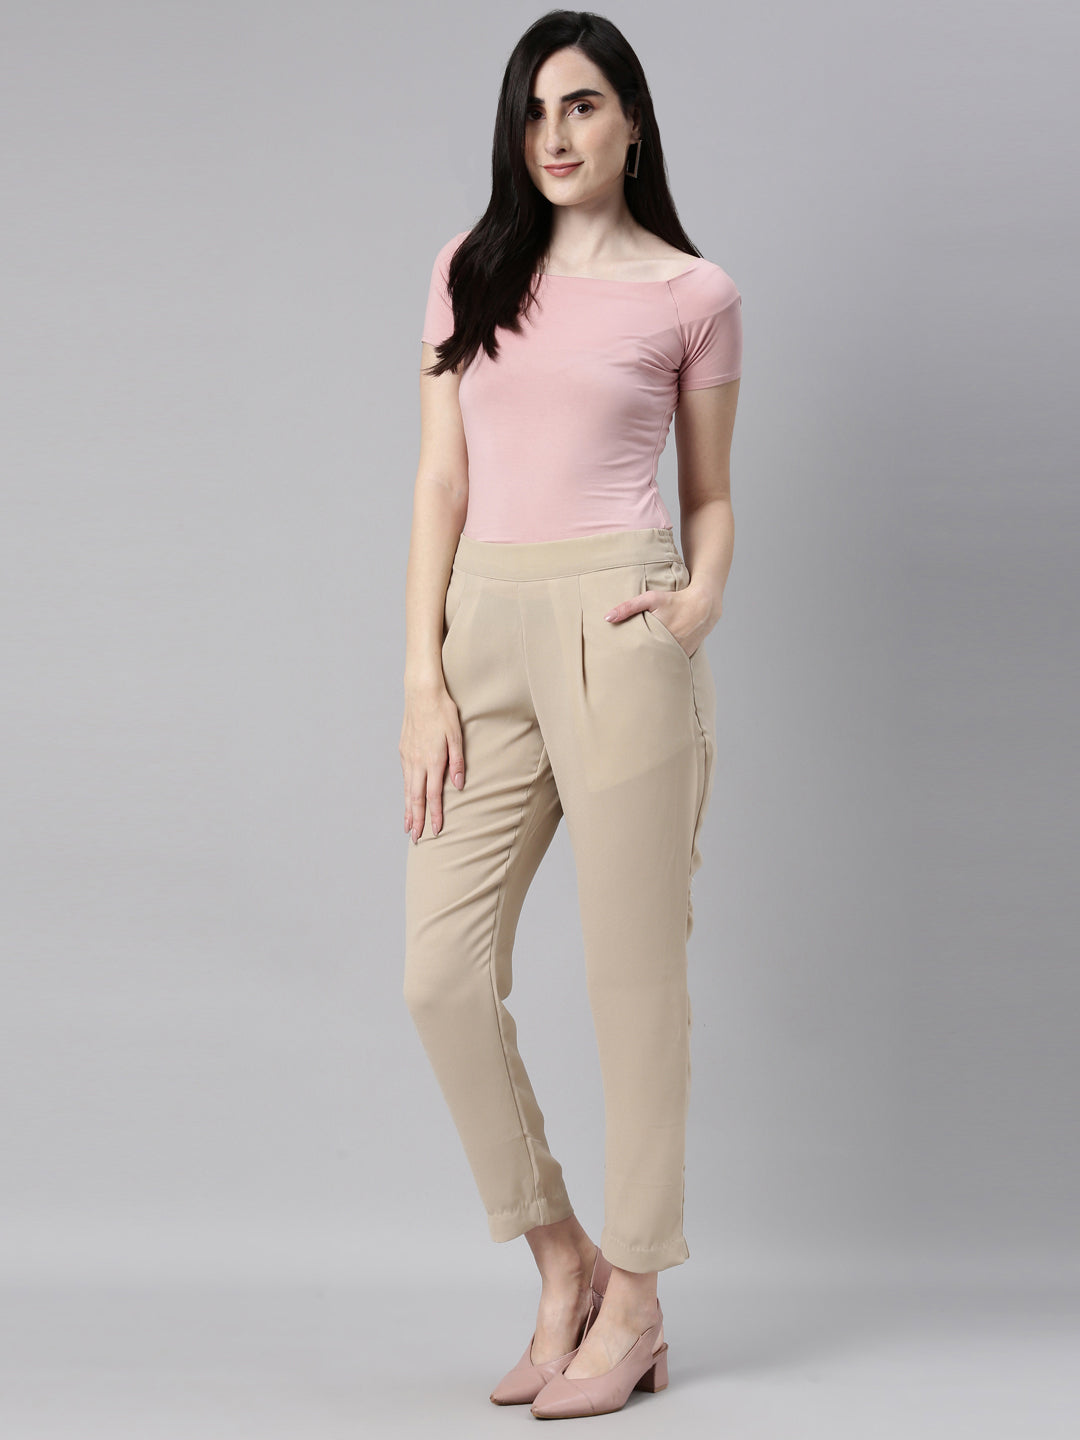 Buy Girls' Cream Color Pants - Elegant and Versatile Wardrobe Staple (2XL)  at Amazon.in